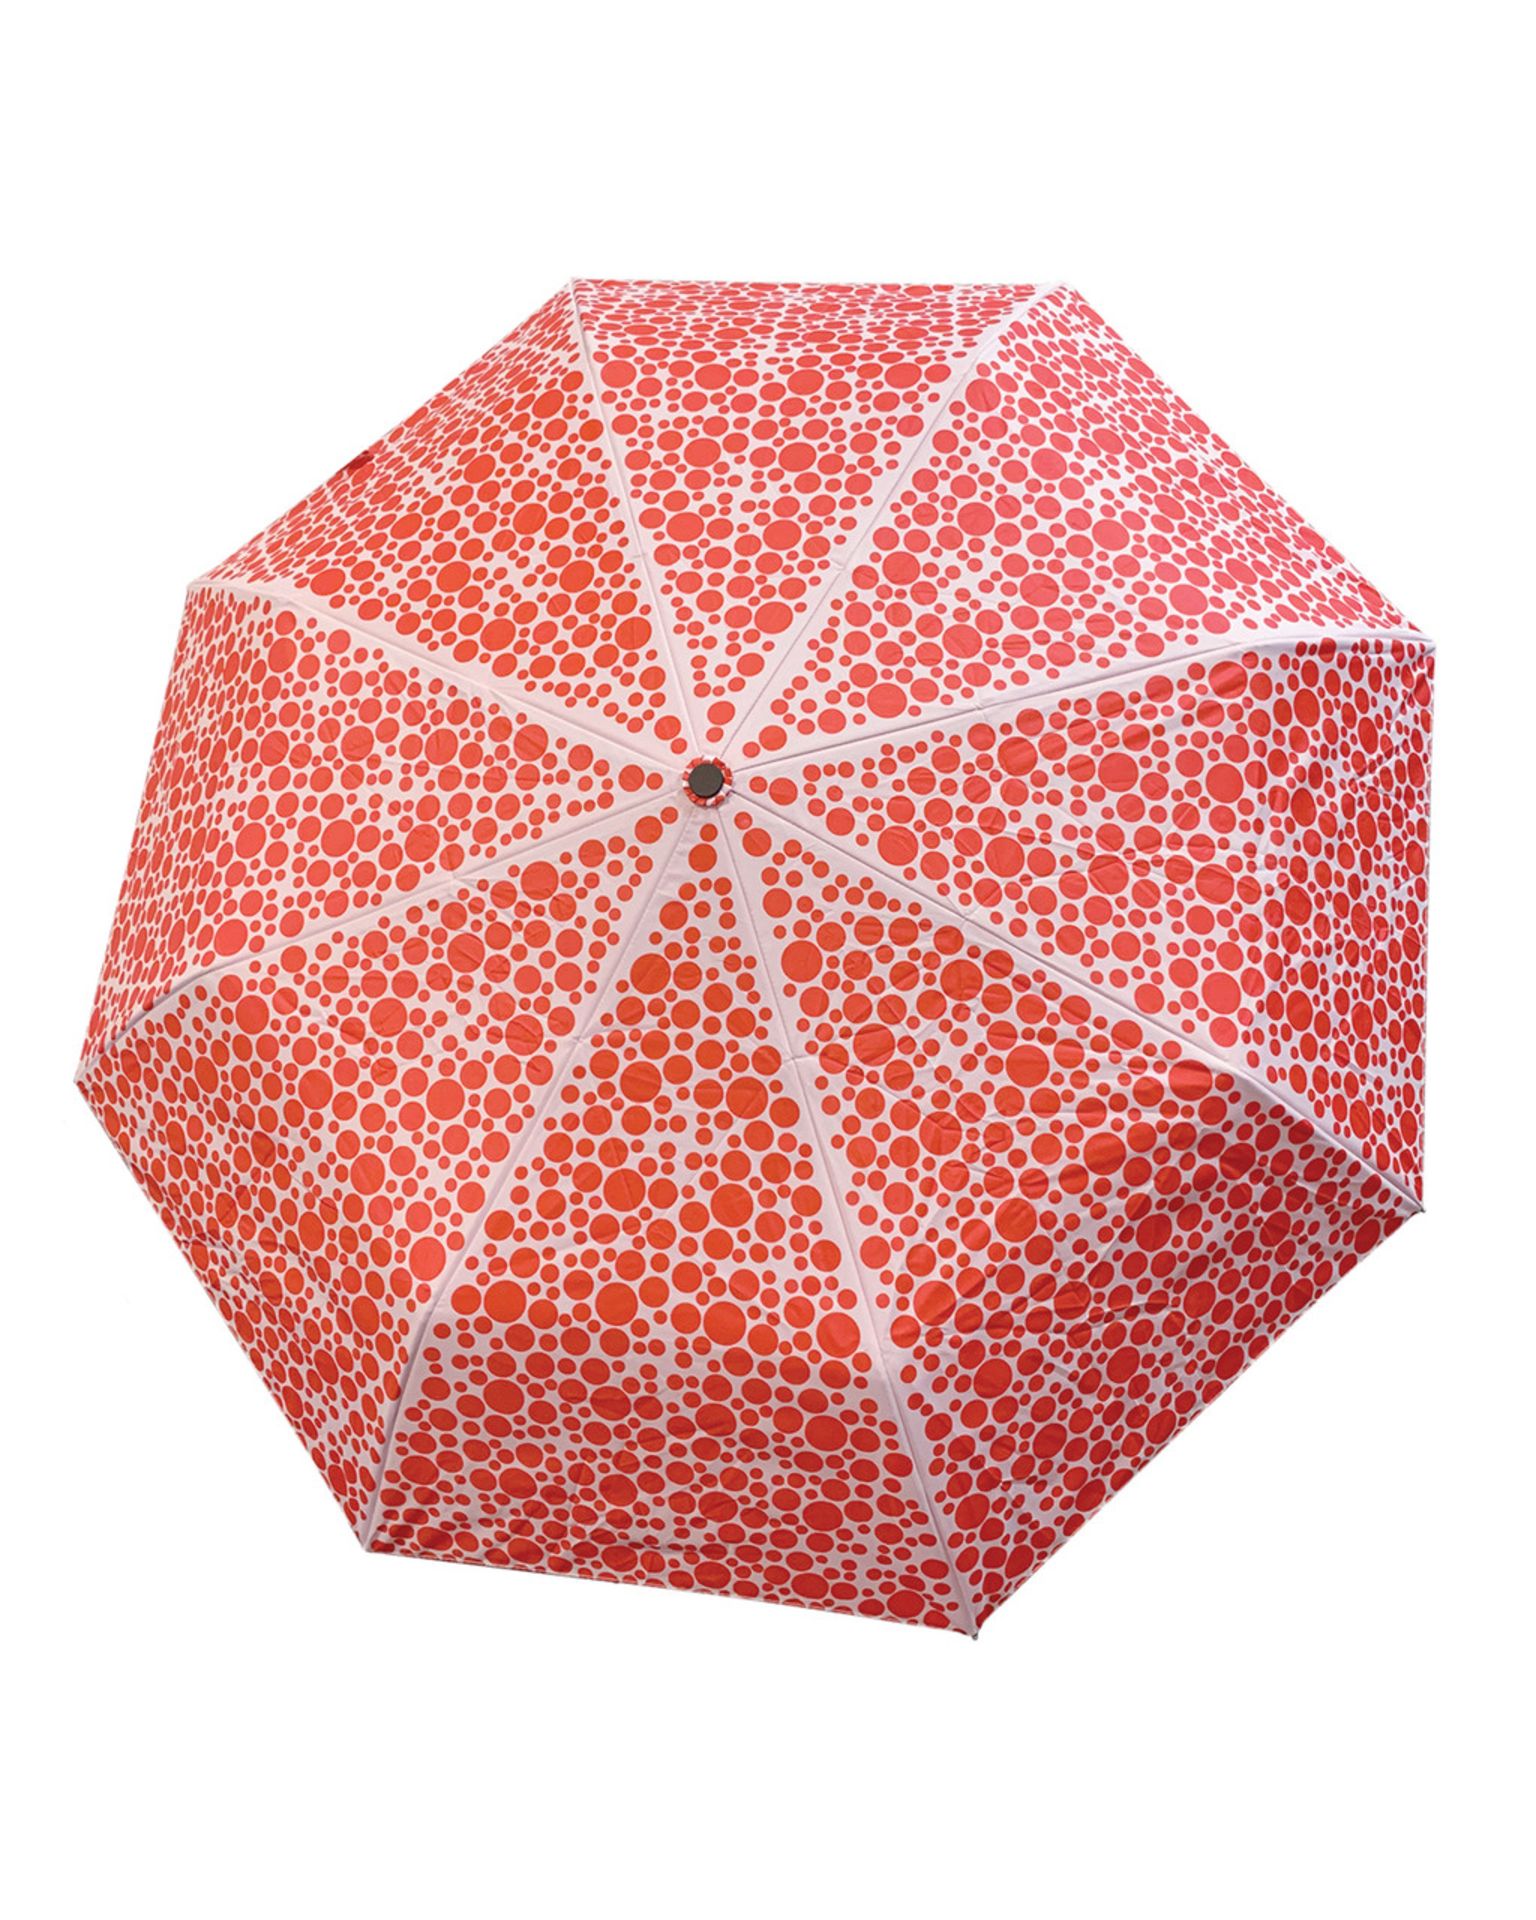 Yayoi Kusama Umbrella